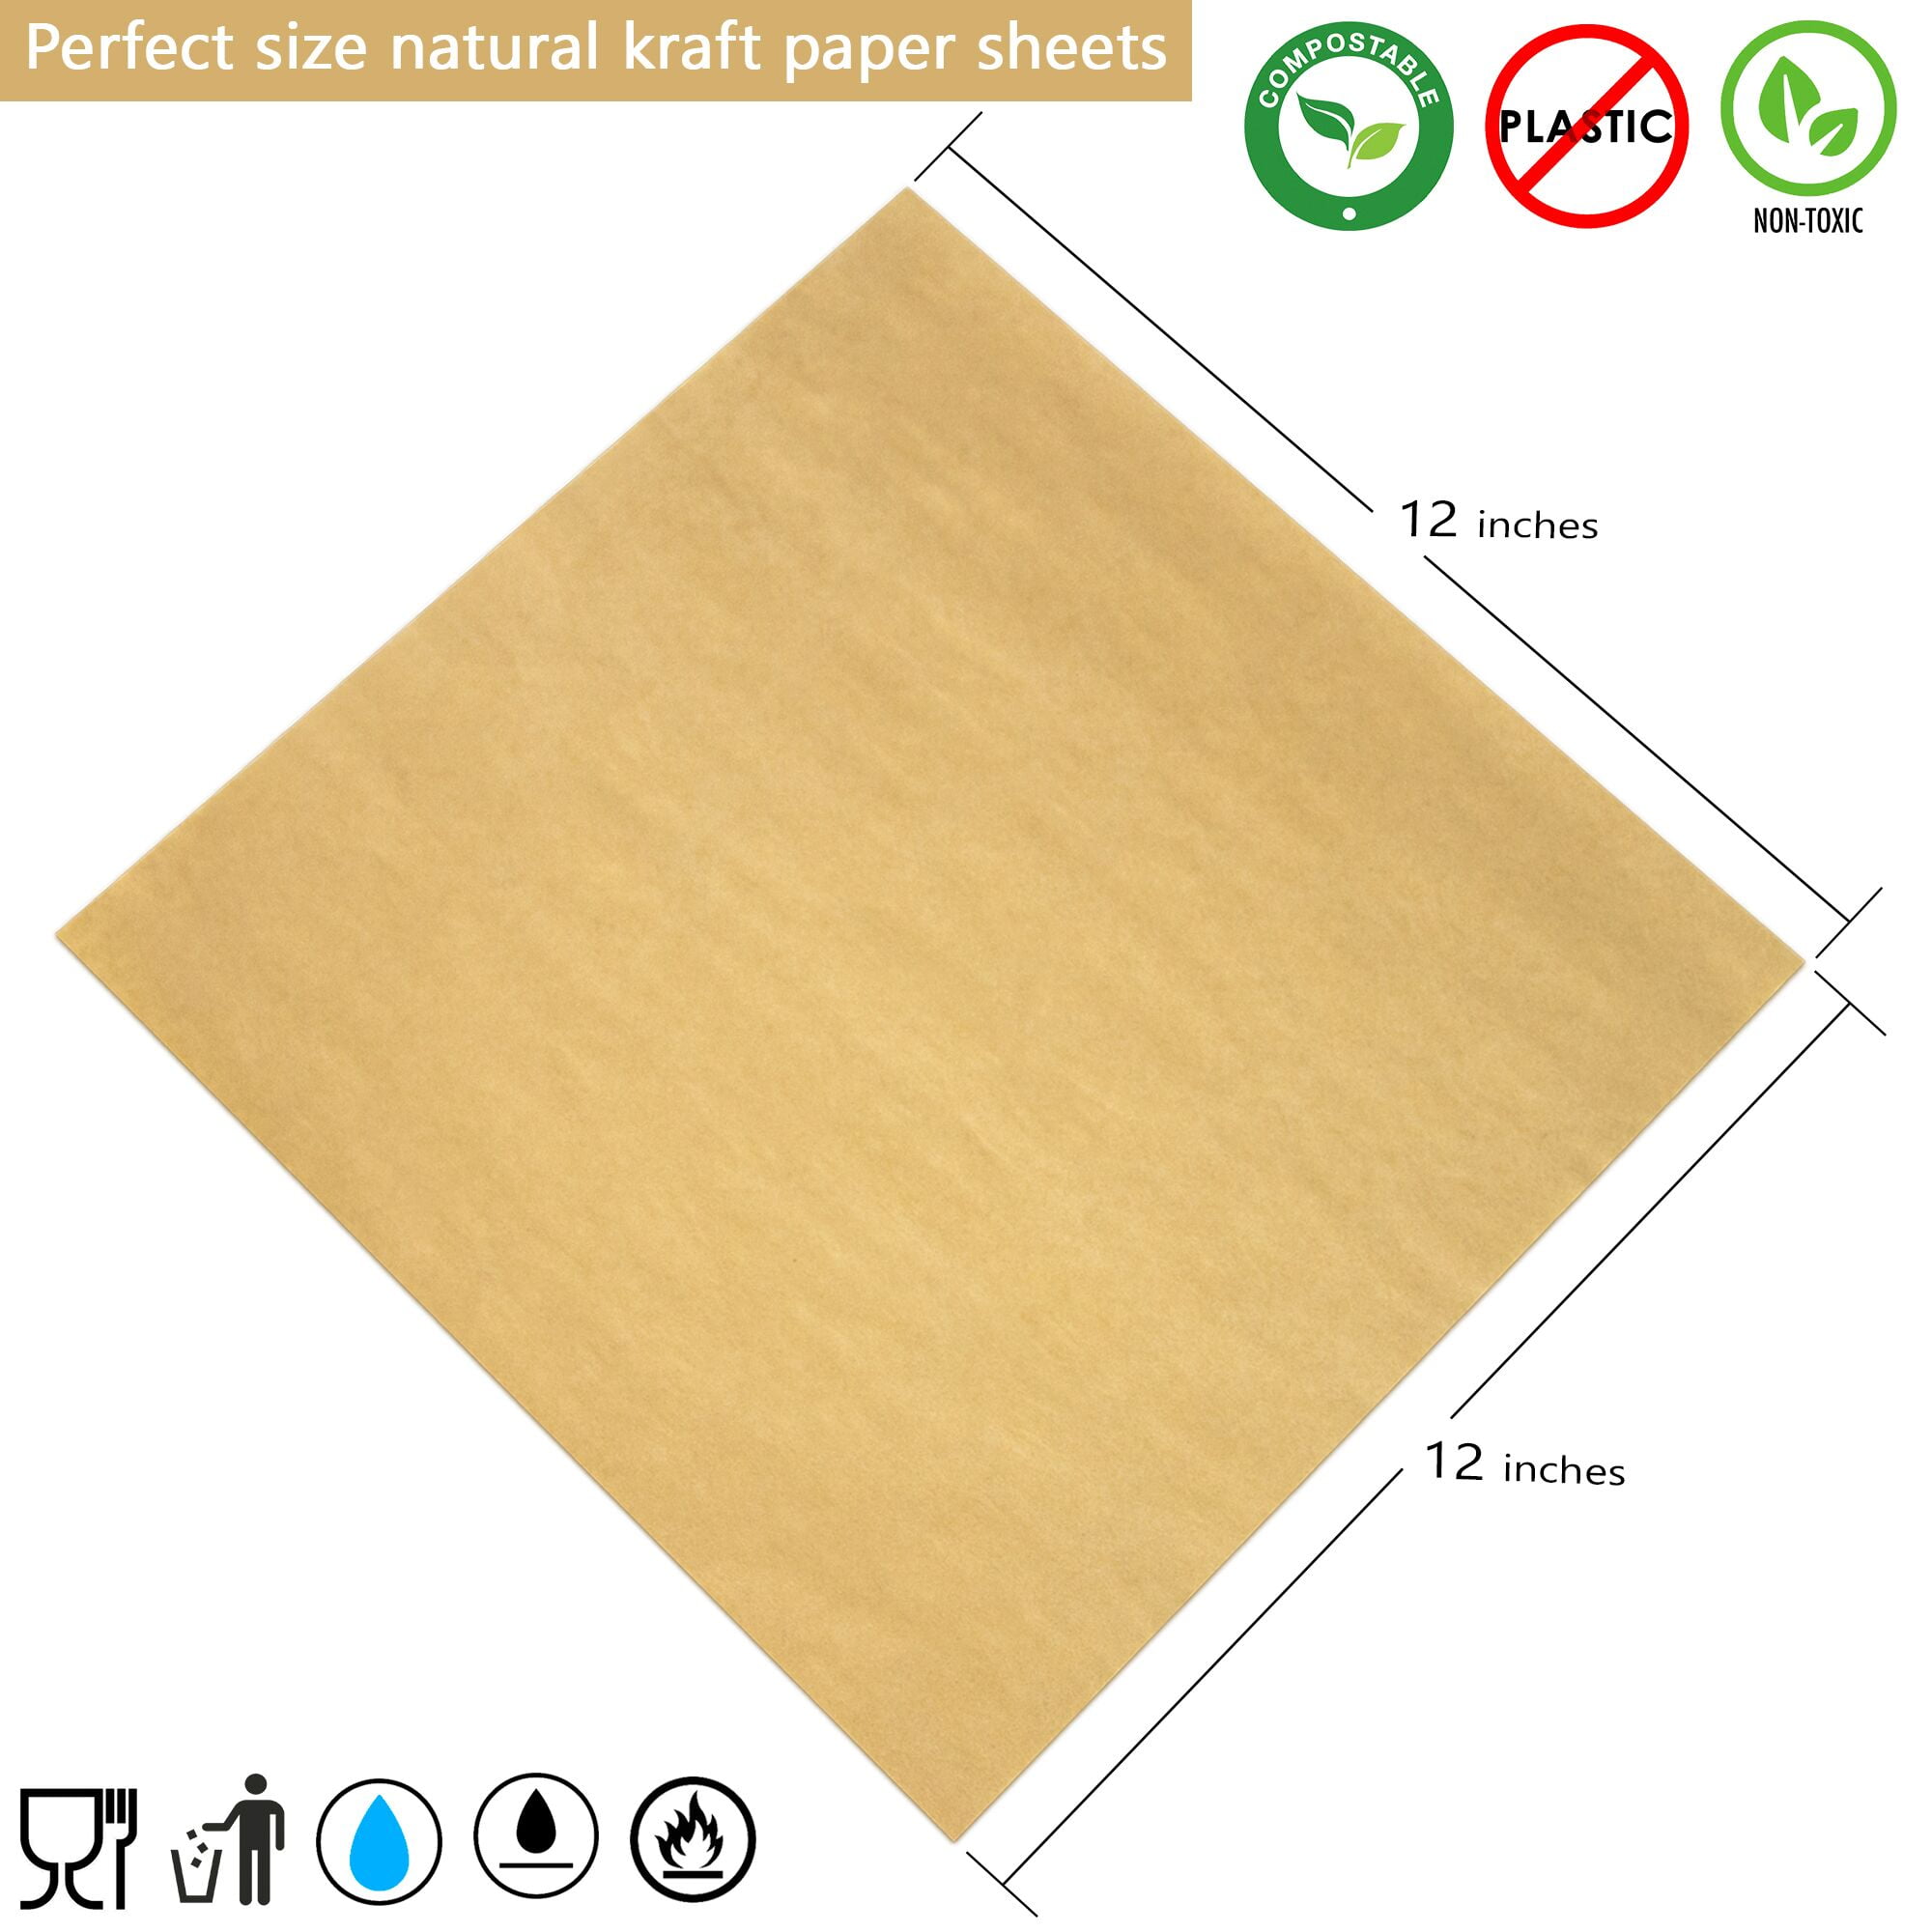 12 x 12 PFAS-Free, Grease-Proof Paper Sheets, Natural Kraft buy